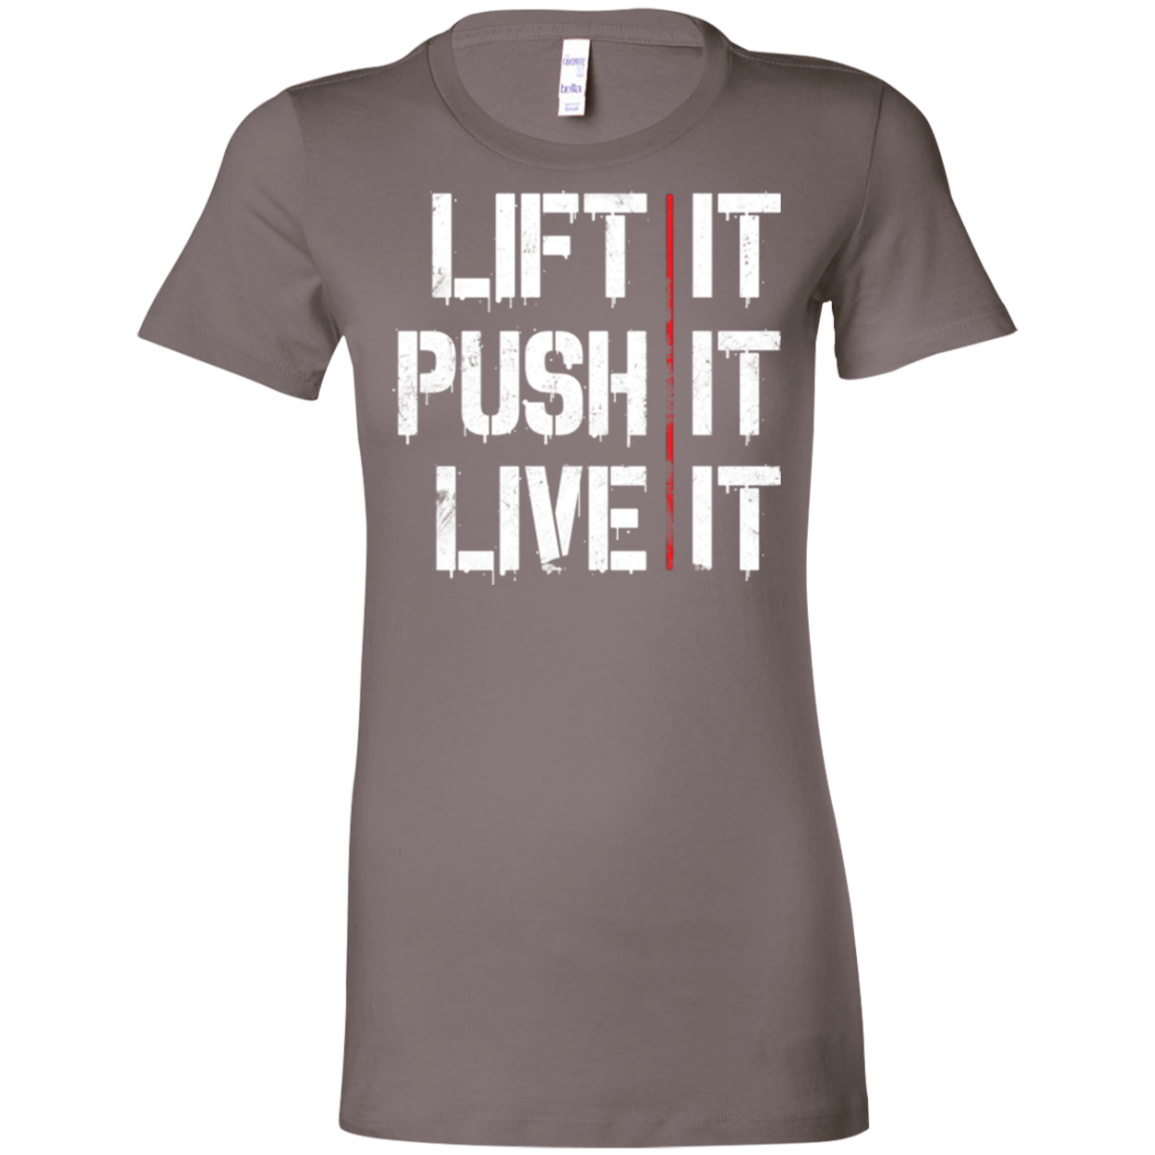 LIFT IT, PUSH IT, LIVE IT T-Shirt